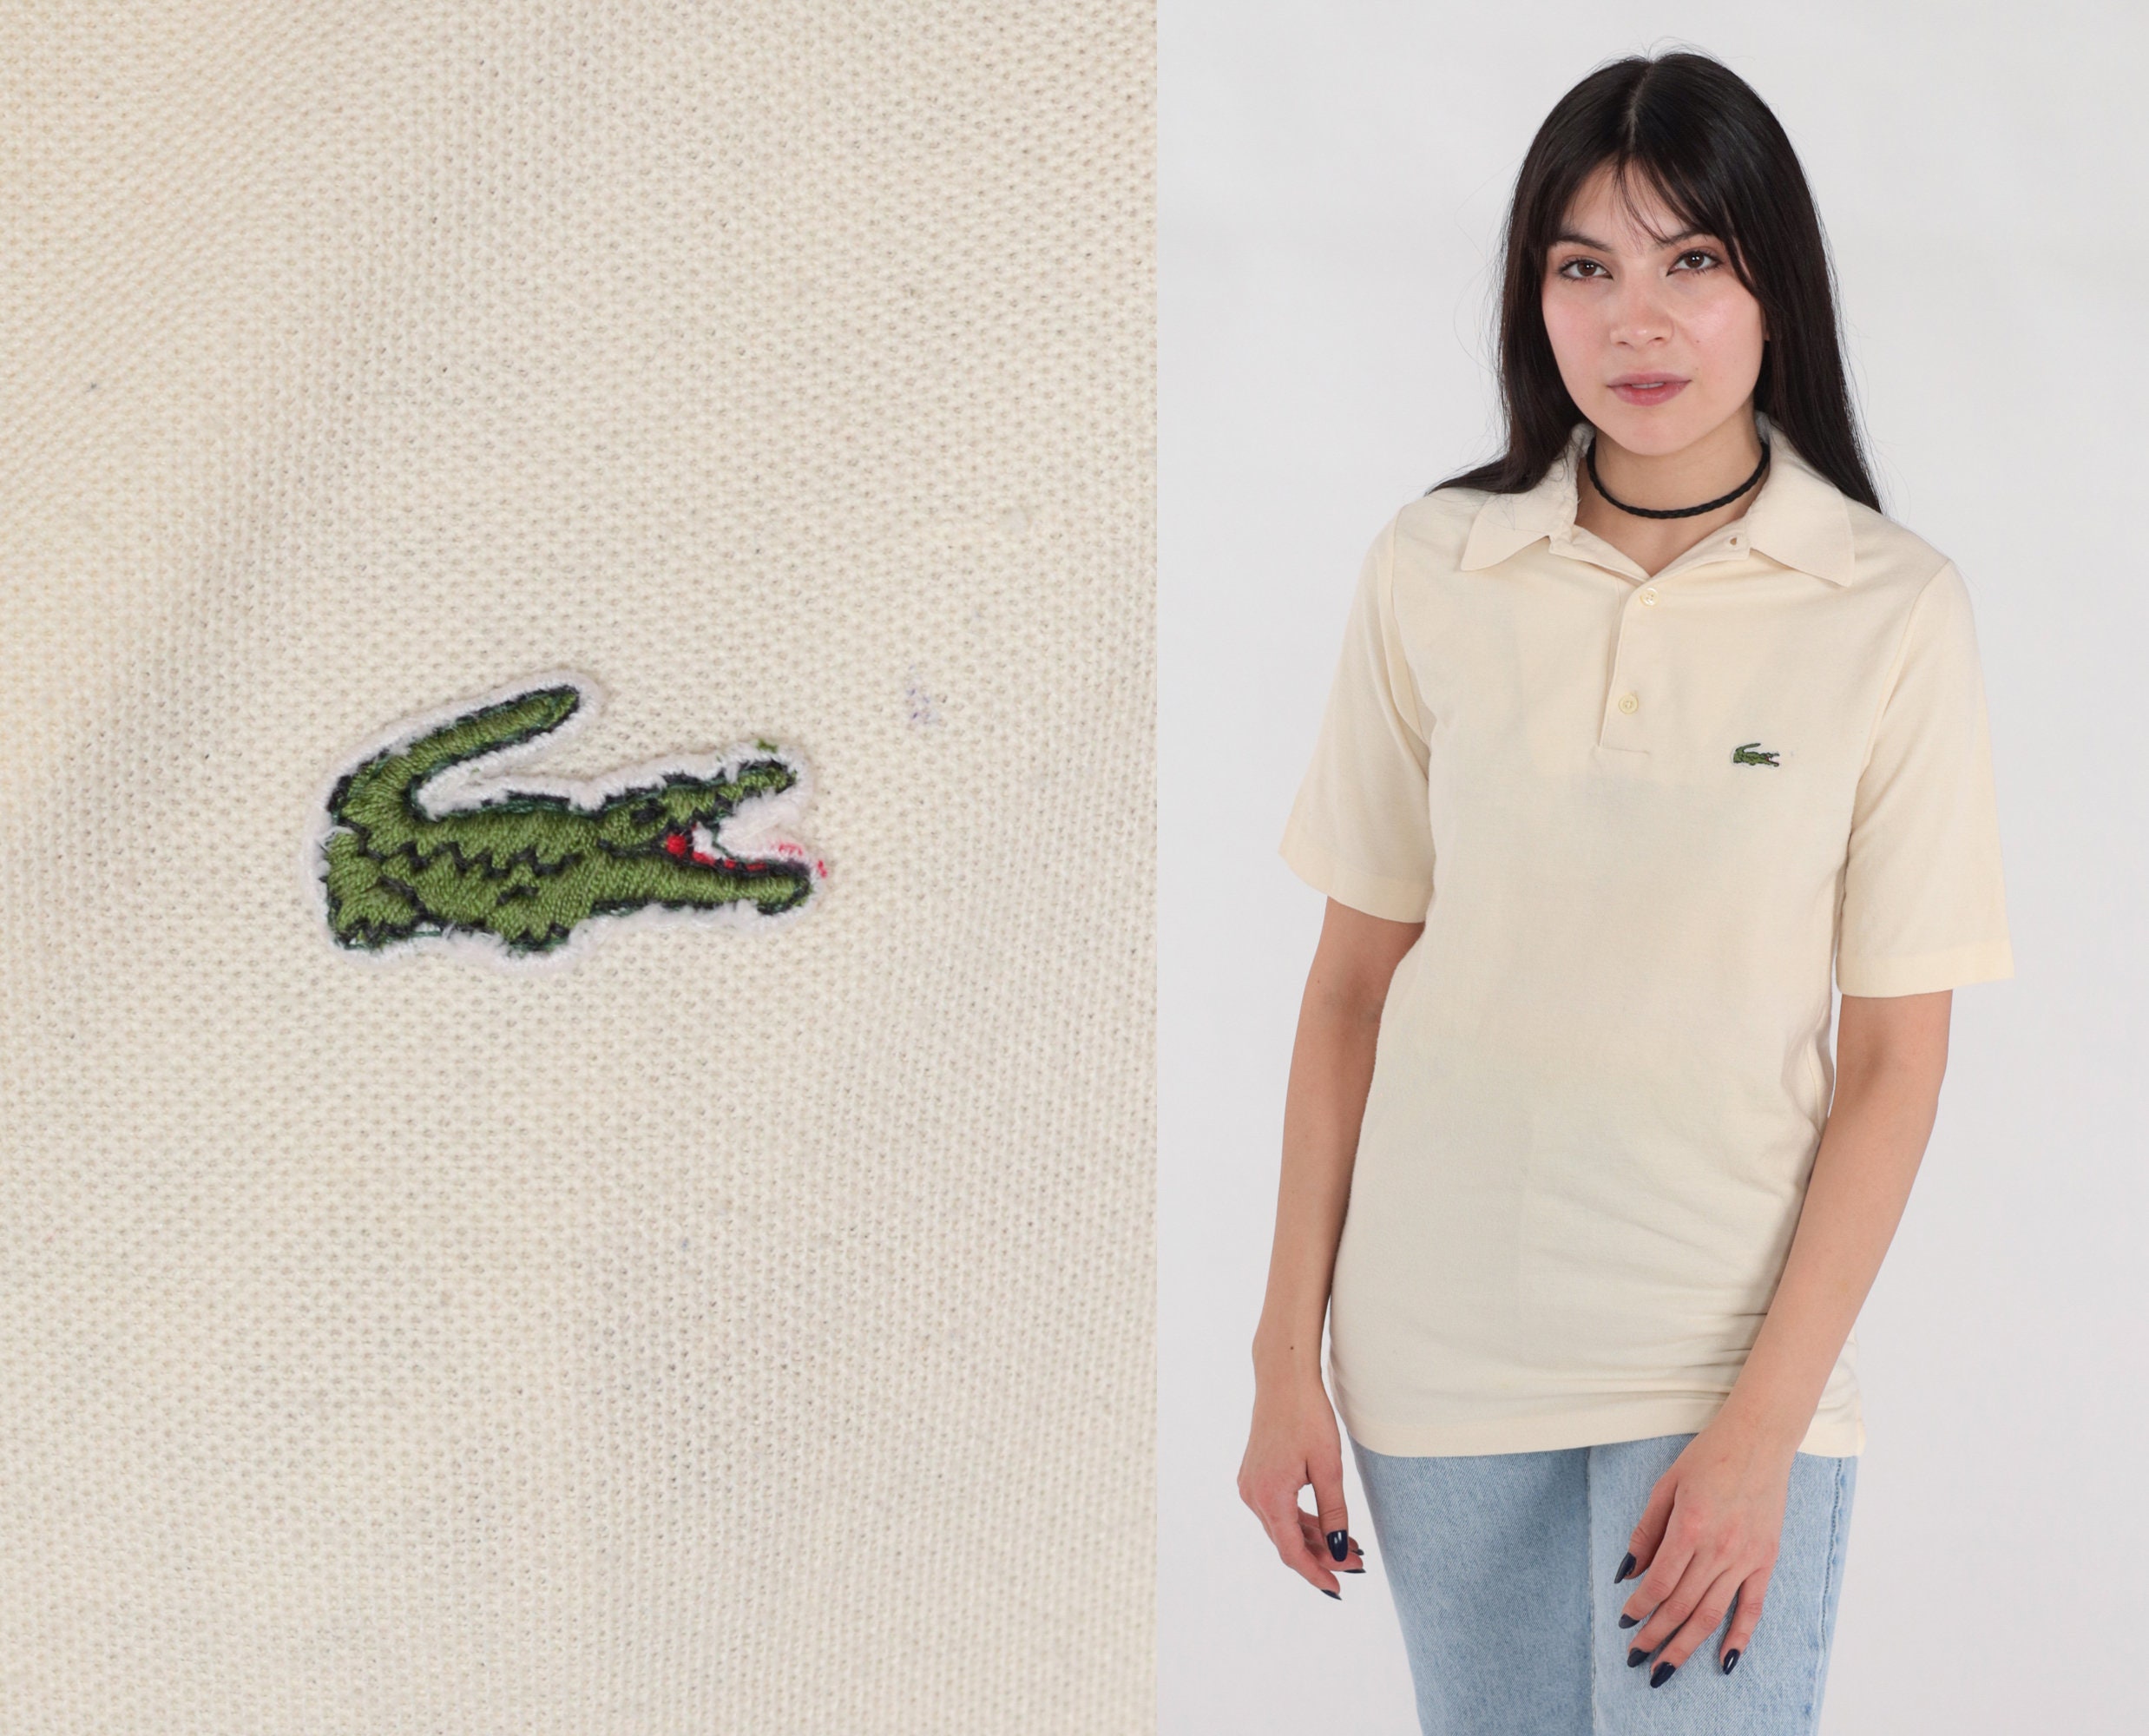 Polo Shirt 80s Cream Collared Shirt Crocodile T-Shirt Retro Preppy Collar Top Basic Simple Neutral Vintage 1980s Small S